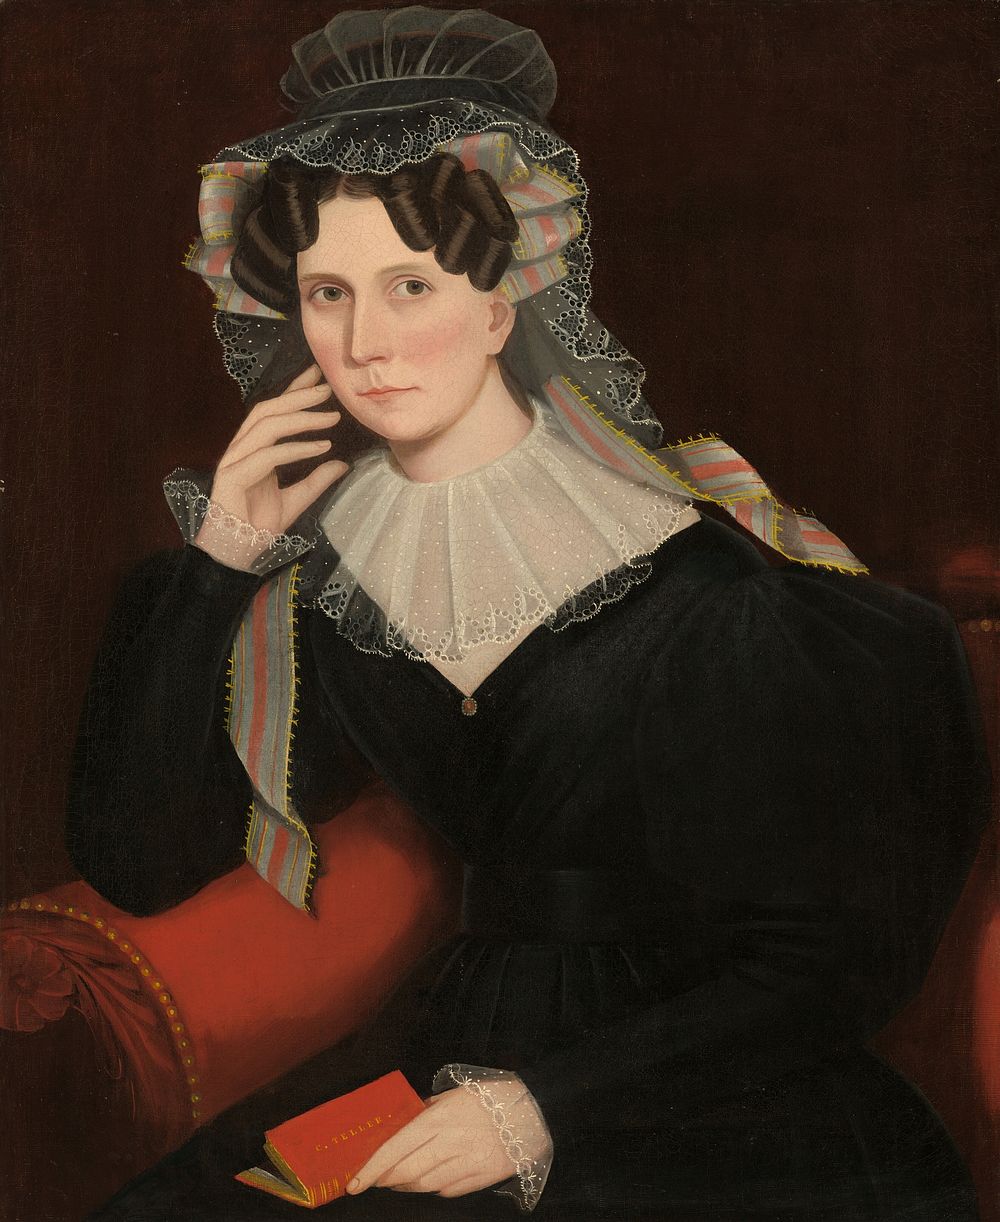 Jane Storm Teller (ca. 1835) by Ammi Phillips.  